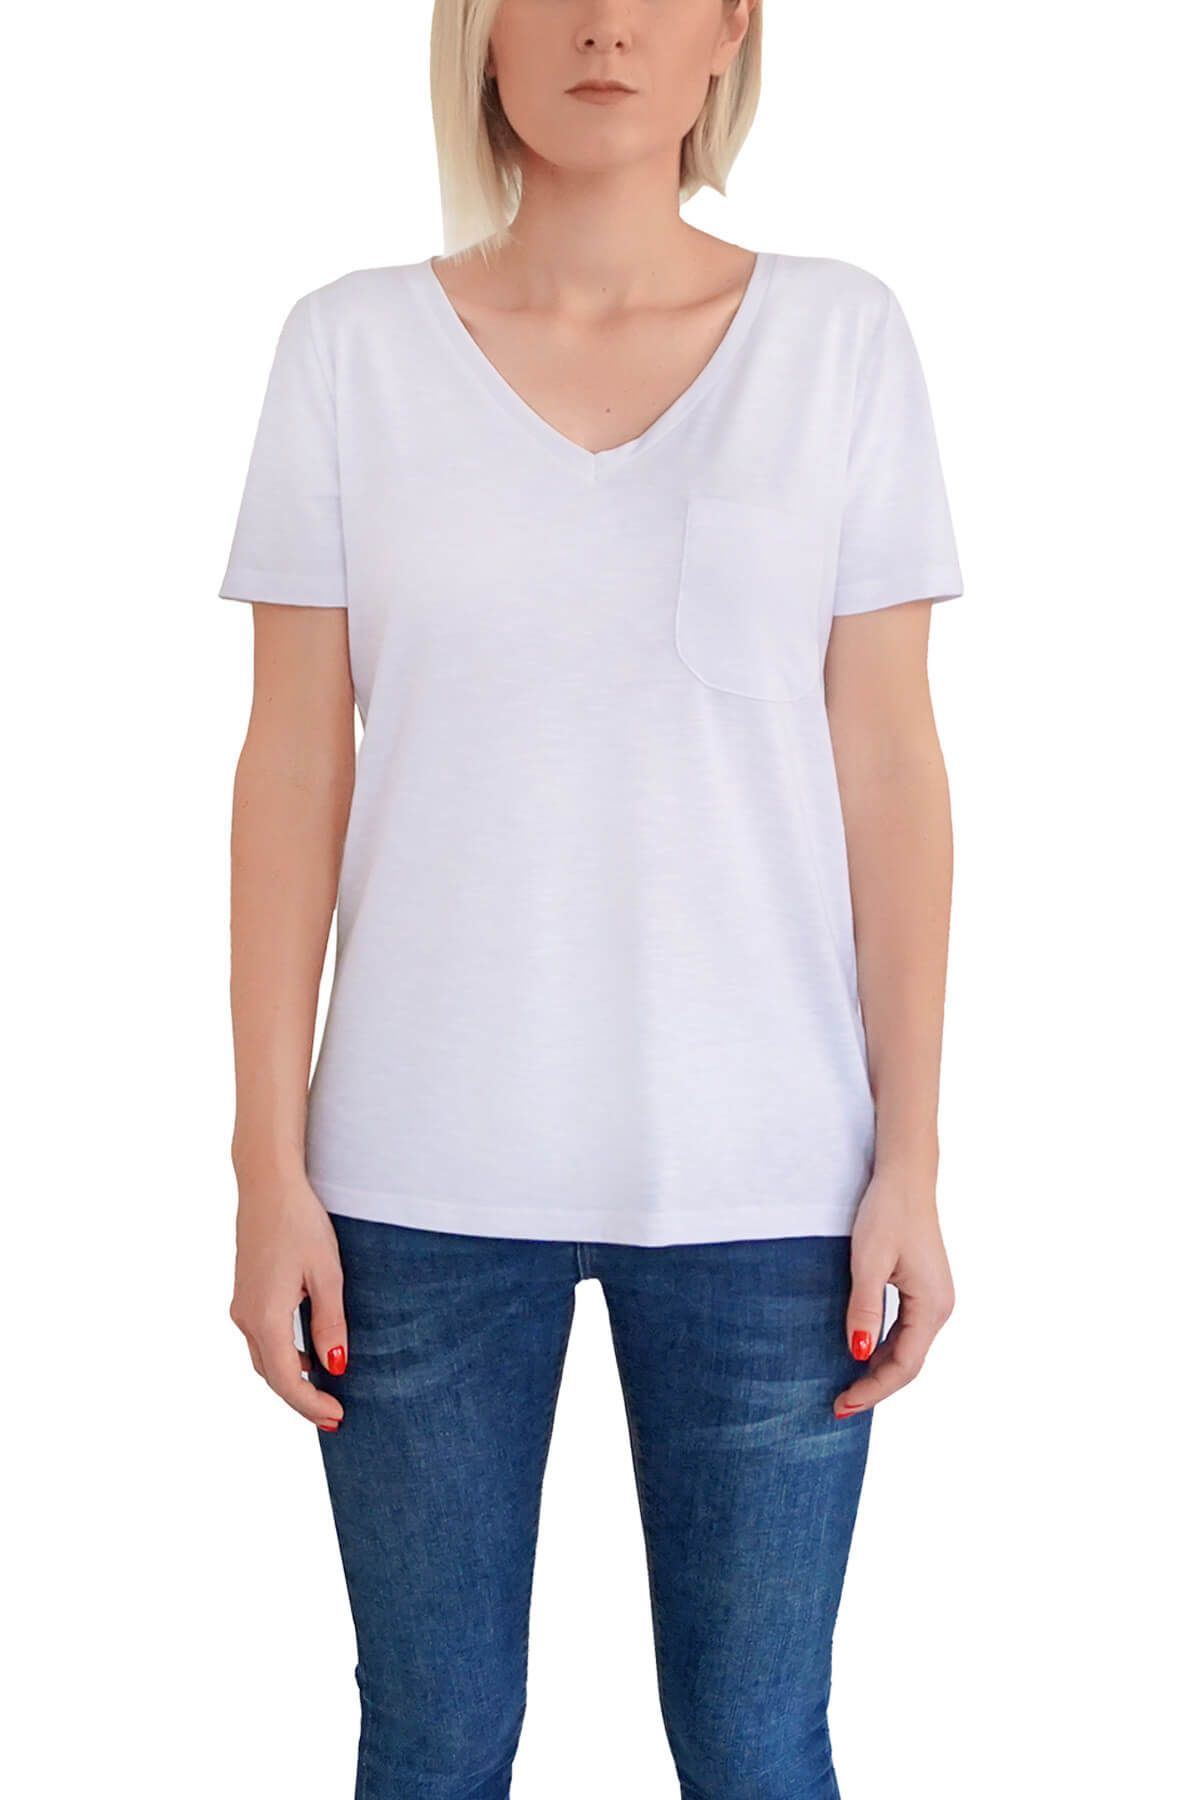 Mof Basics Kadın Beyaz T-Shirt VYCT-B